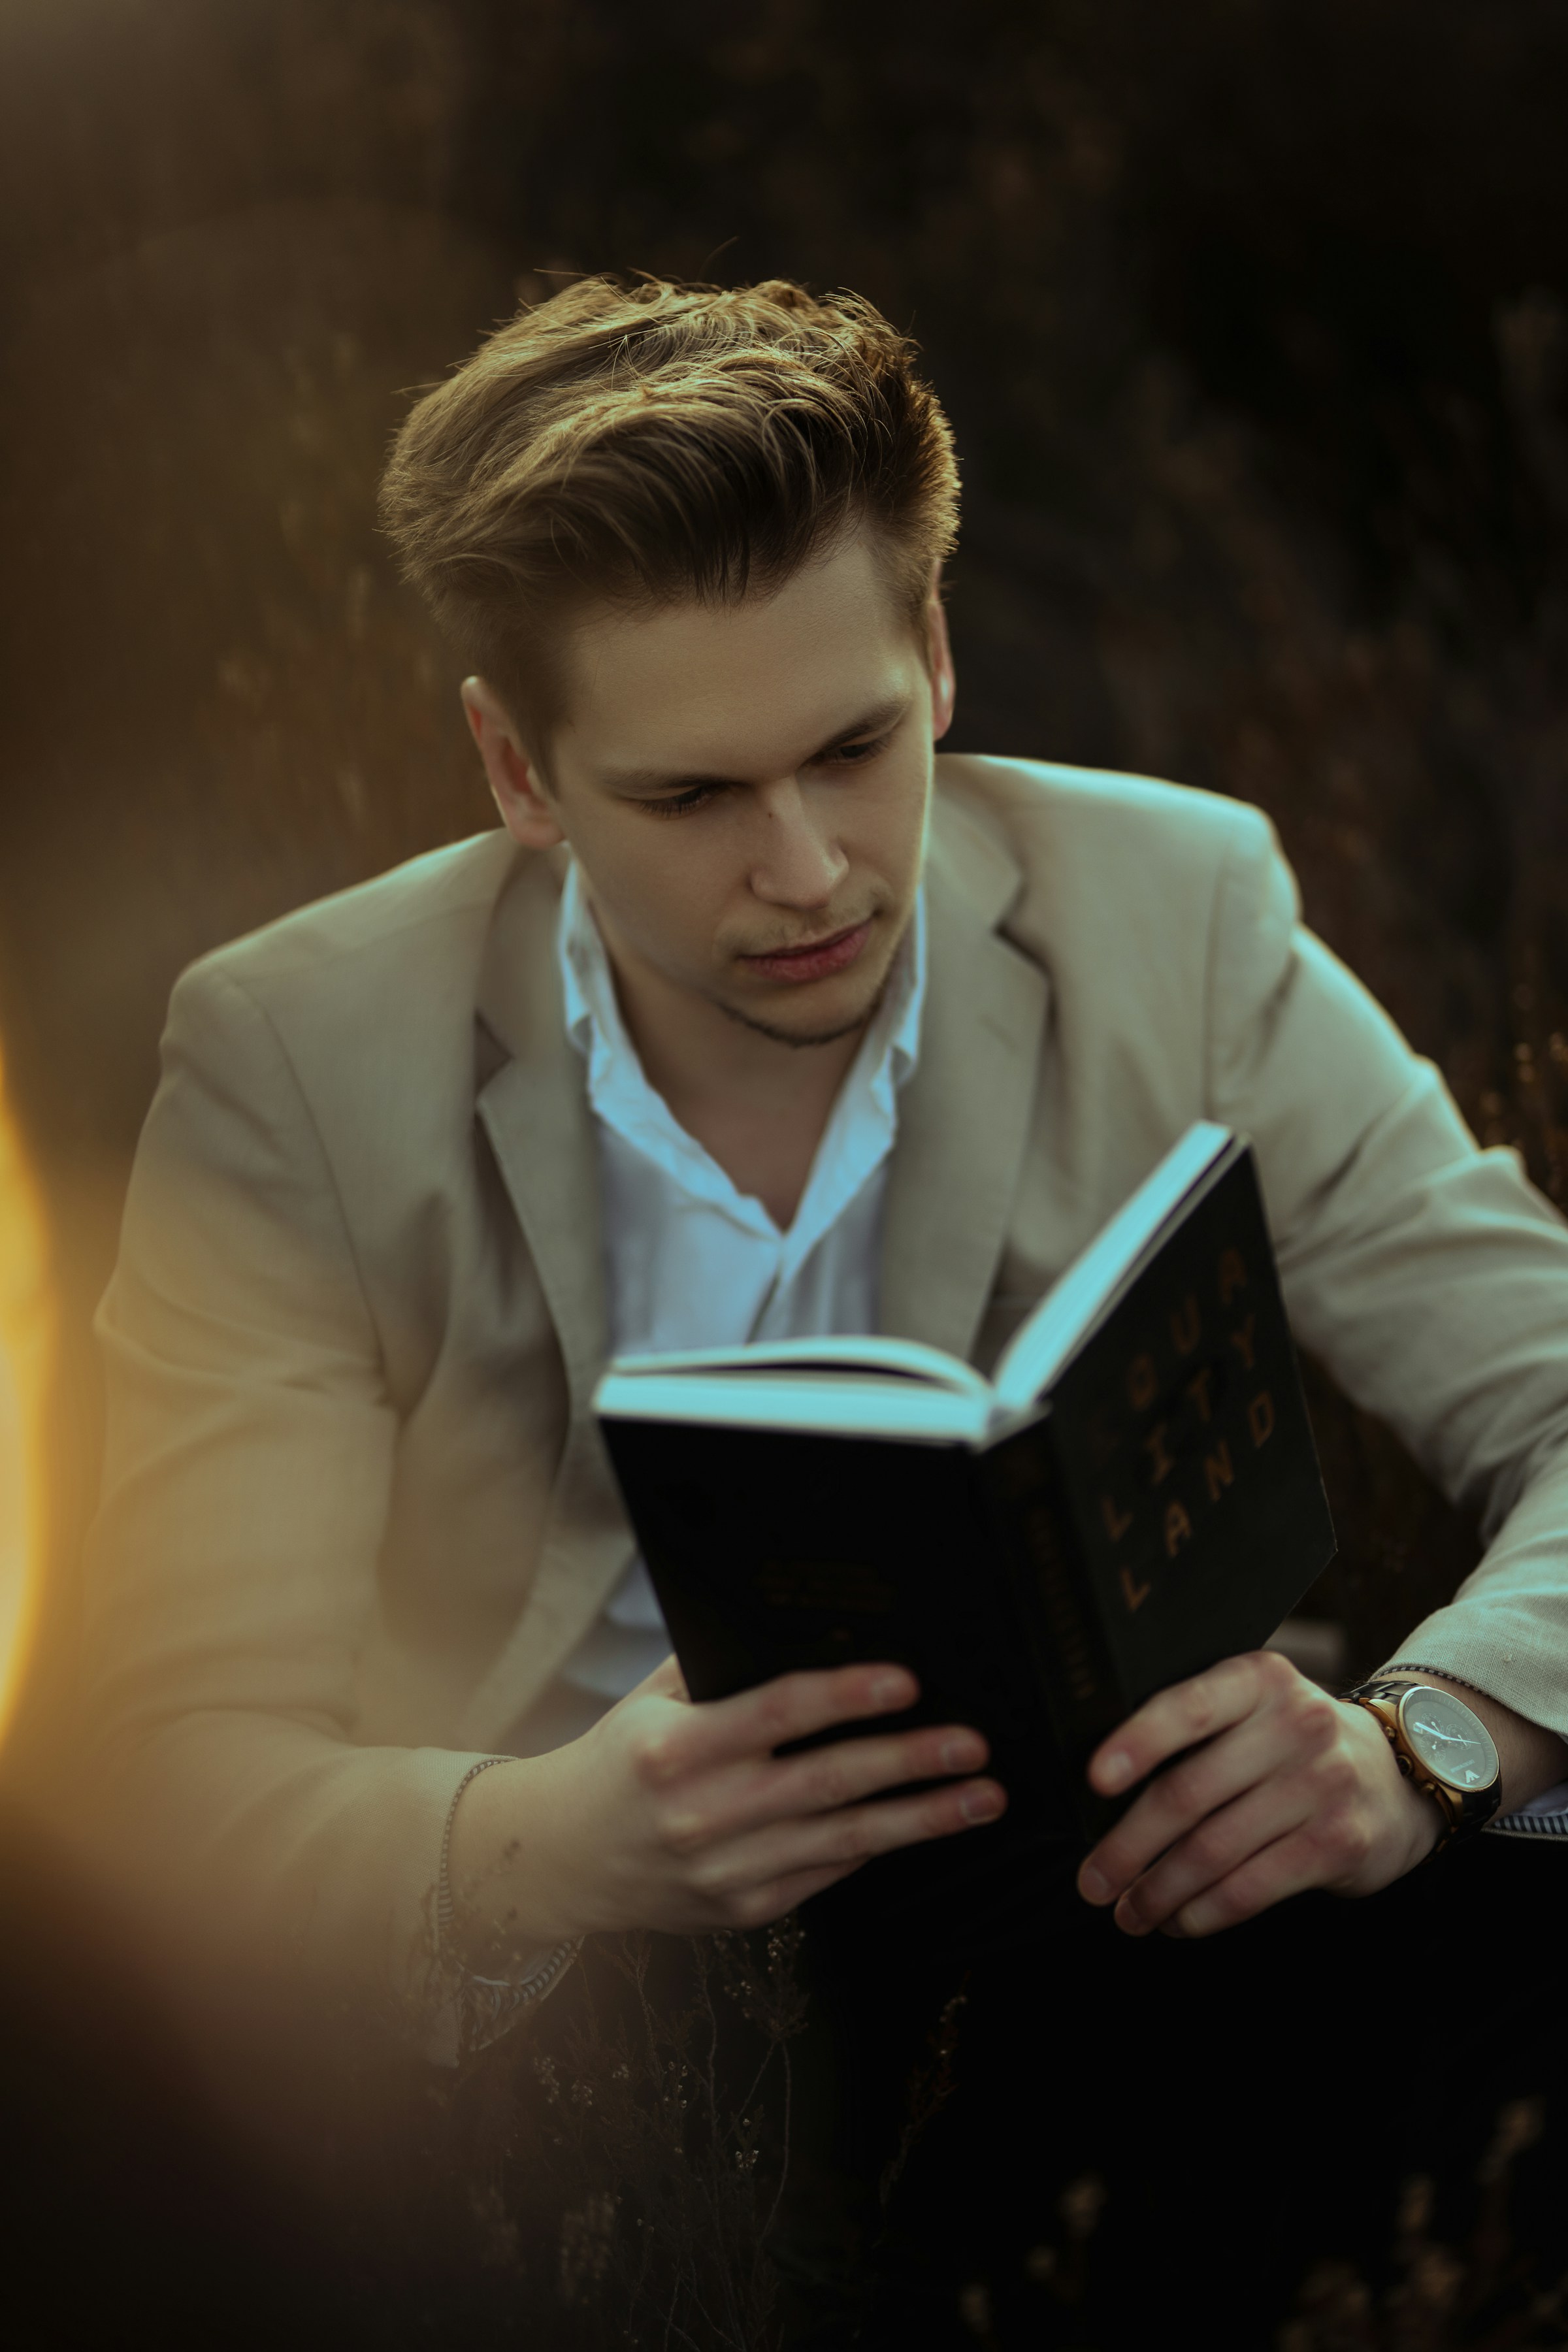 A man reading a book | Source: Unsplash